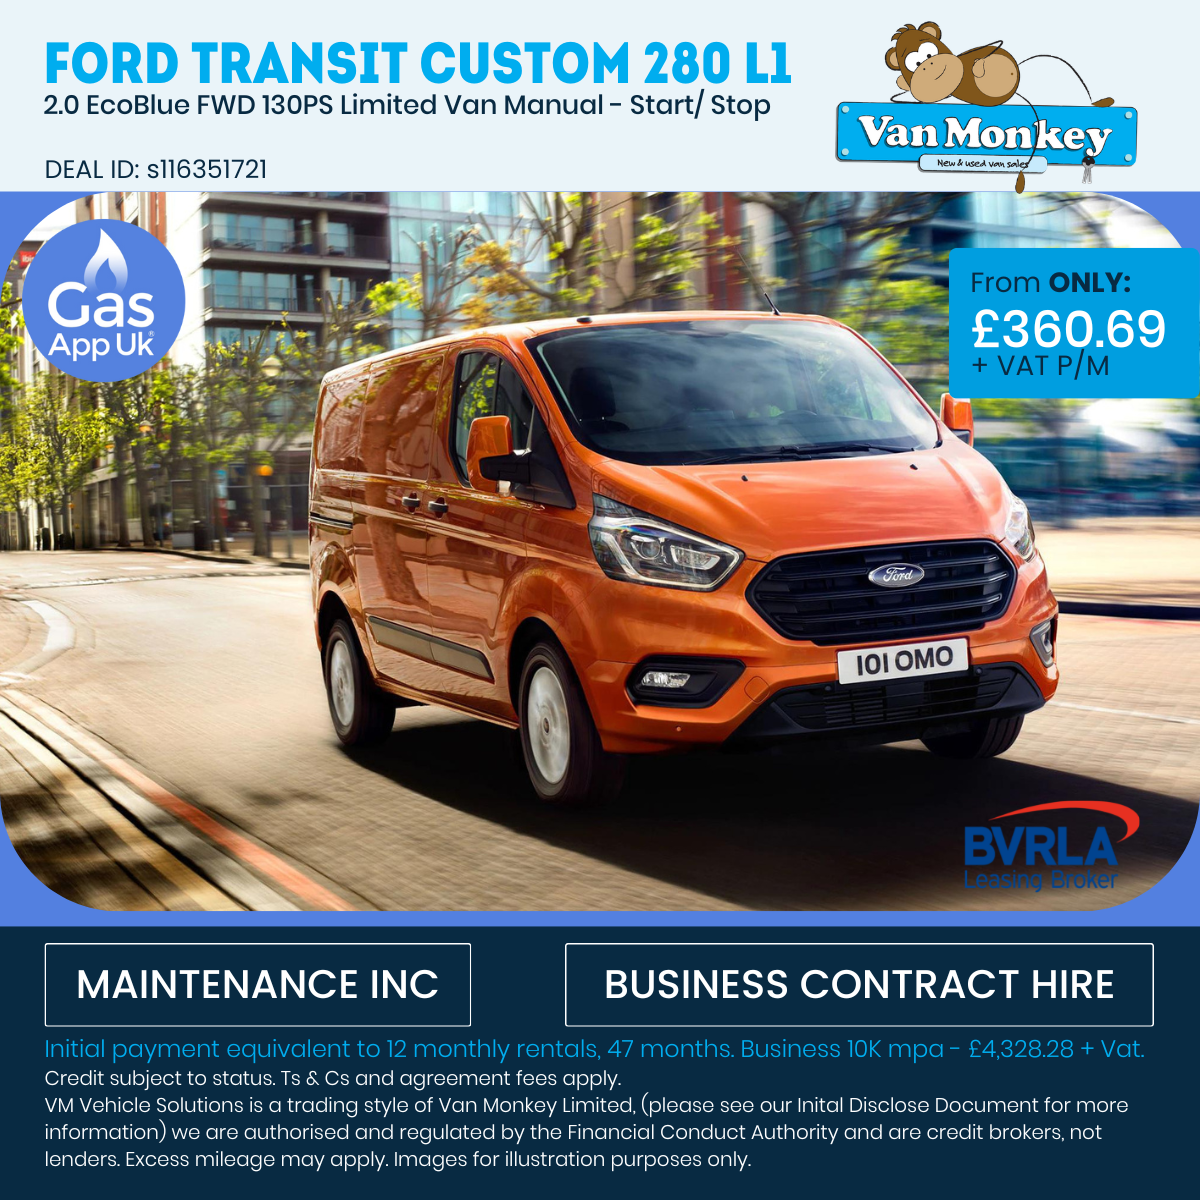 Ford Transit Custom - Gas App